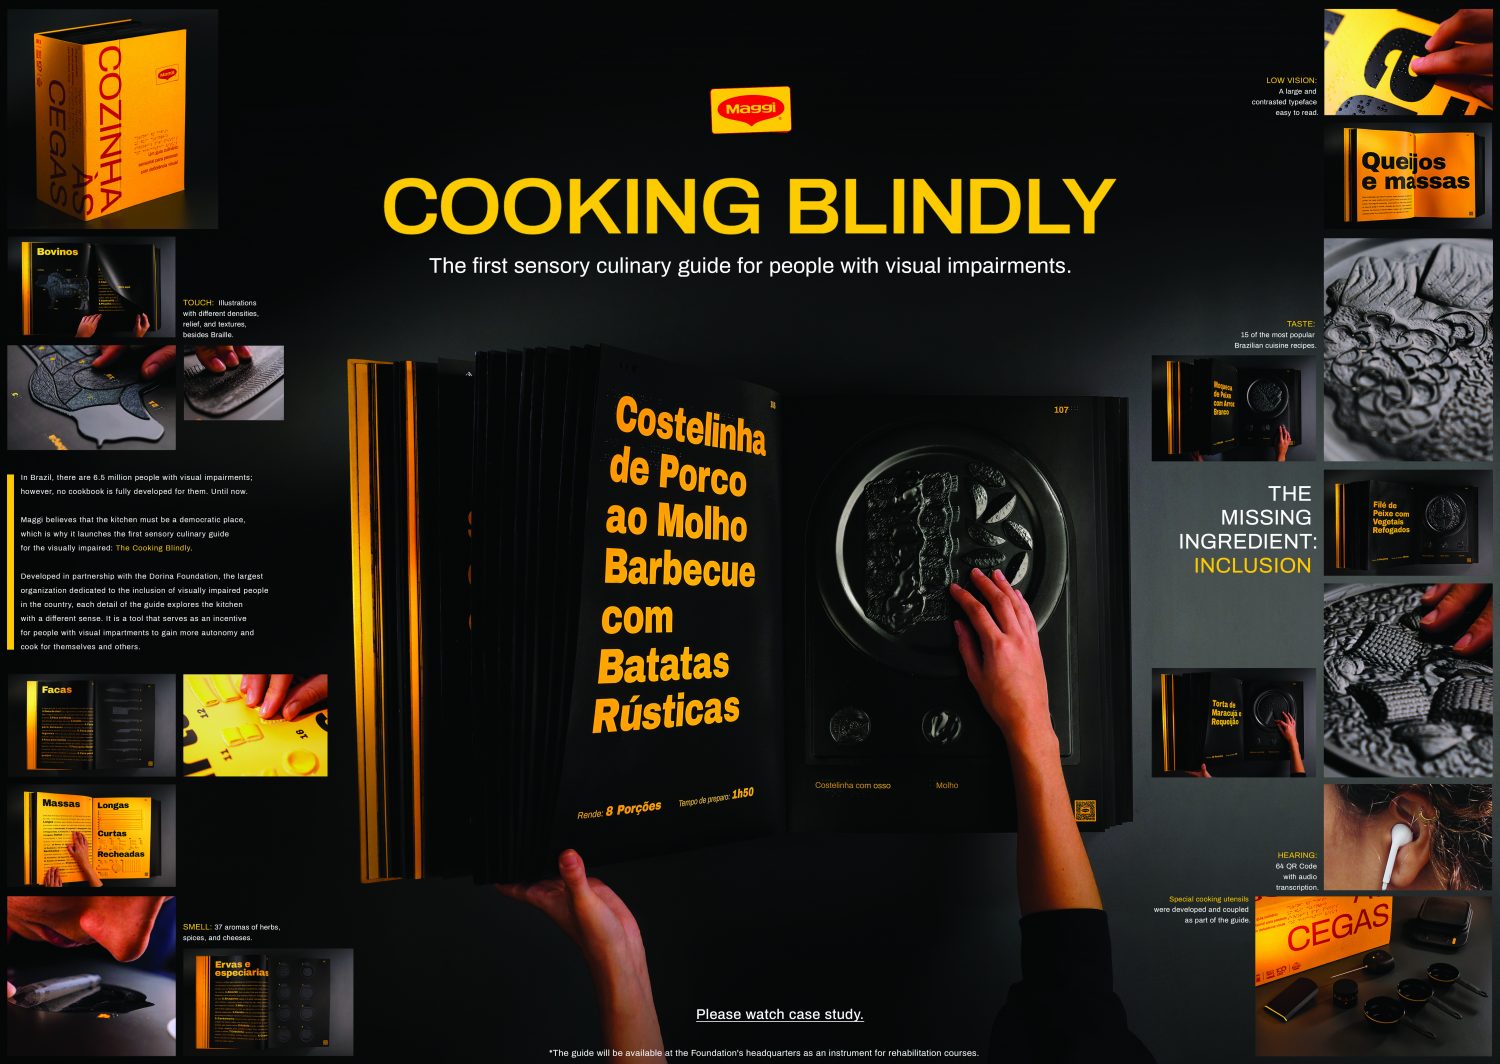 2021-Nestle-Maggi-Cooking Blindly-Board Design-Publicis Brazil-jpg